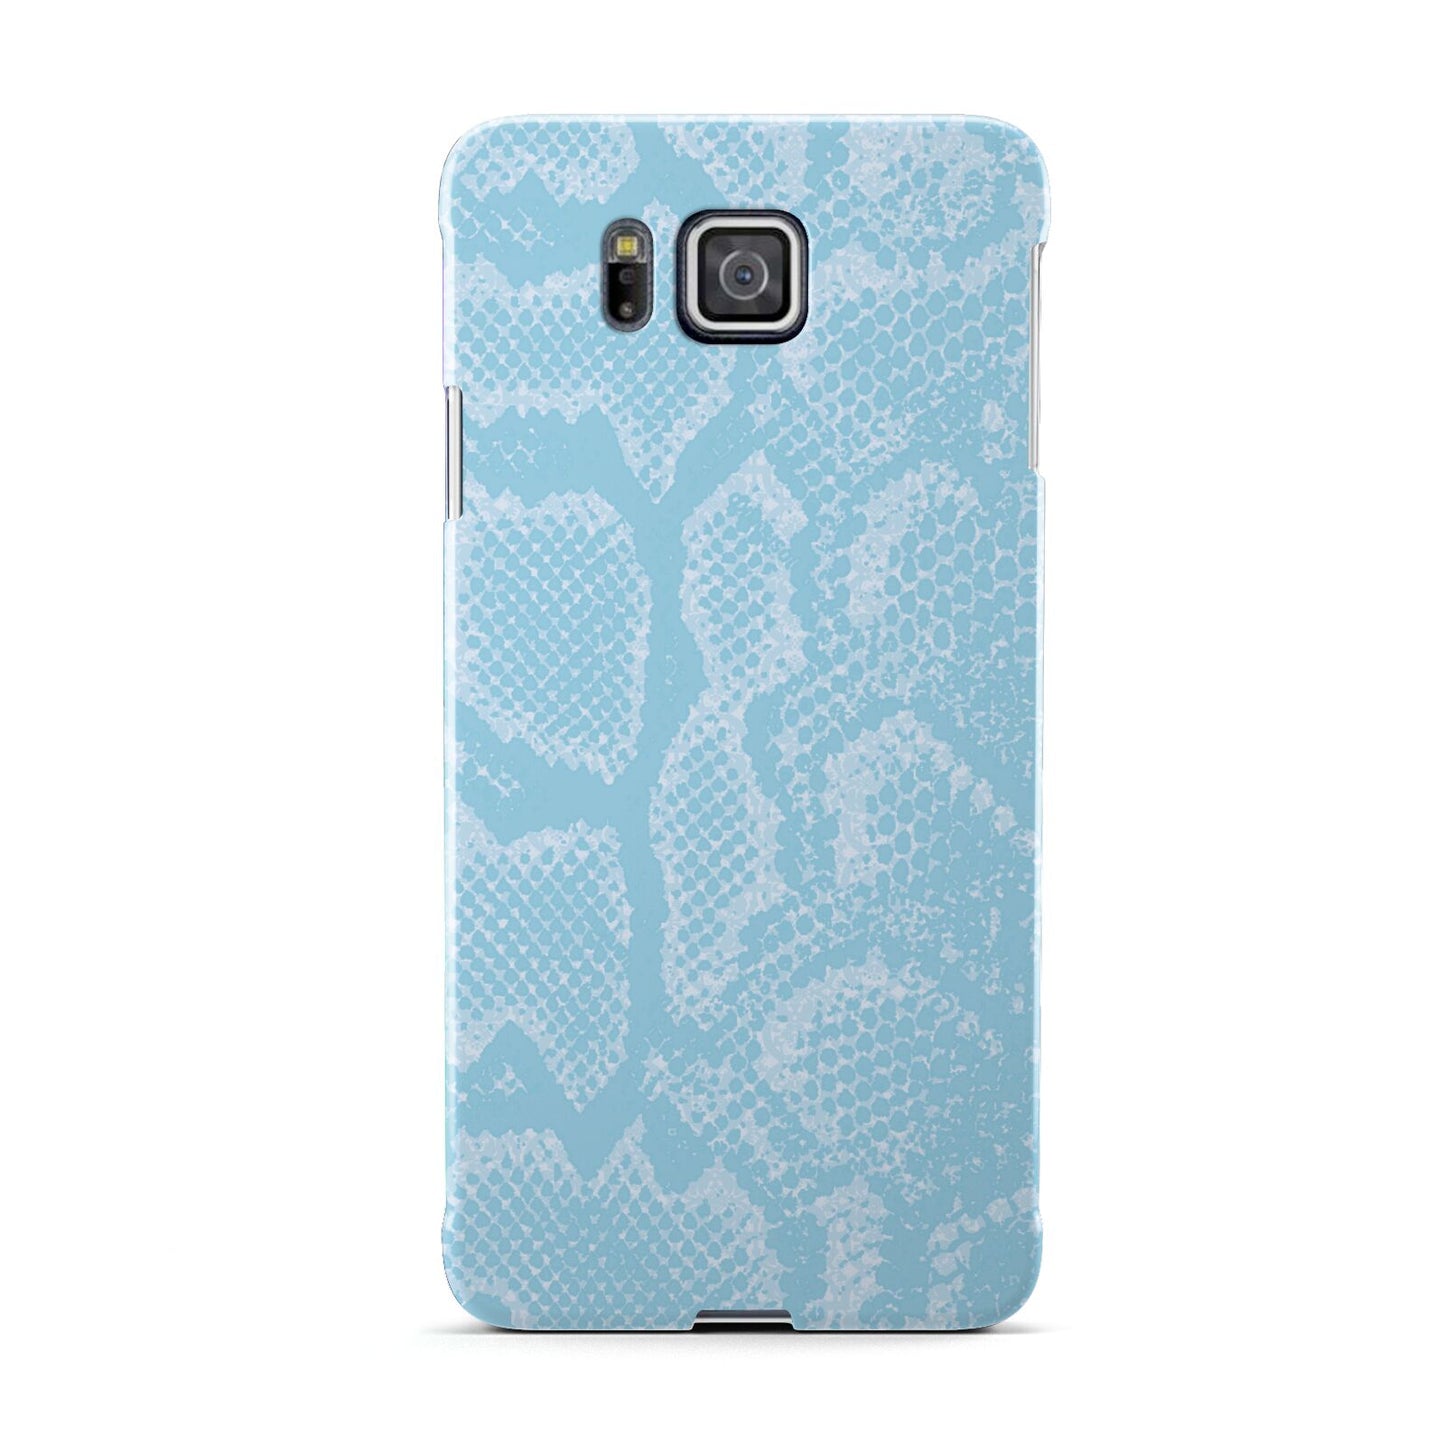 Blue Snakeskin Samsung Galaxy Alpha Case